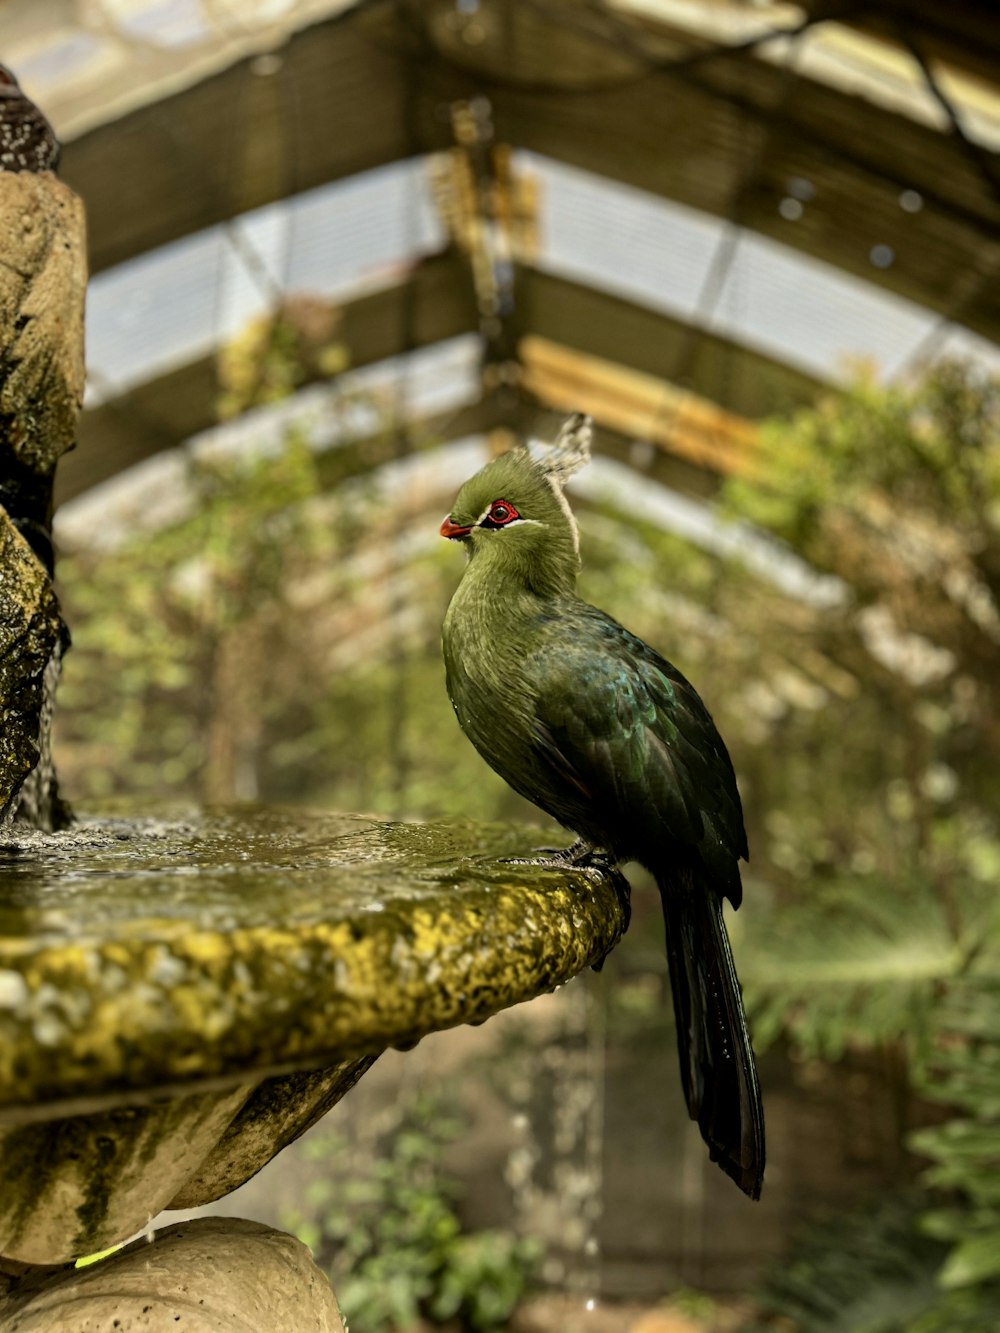 a green bird sitting on top of a bird bath